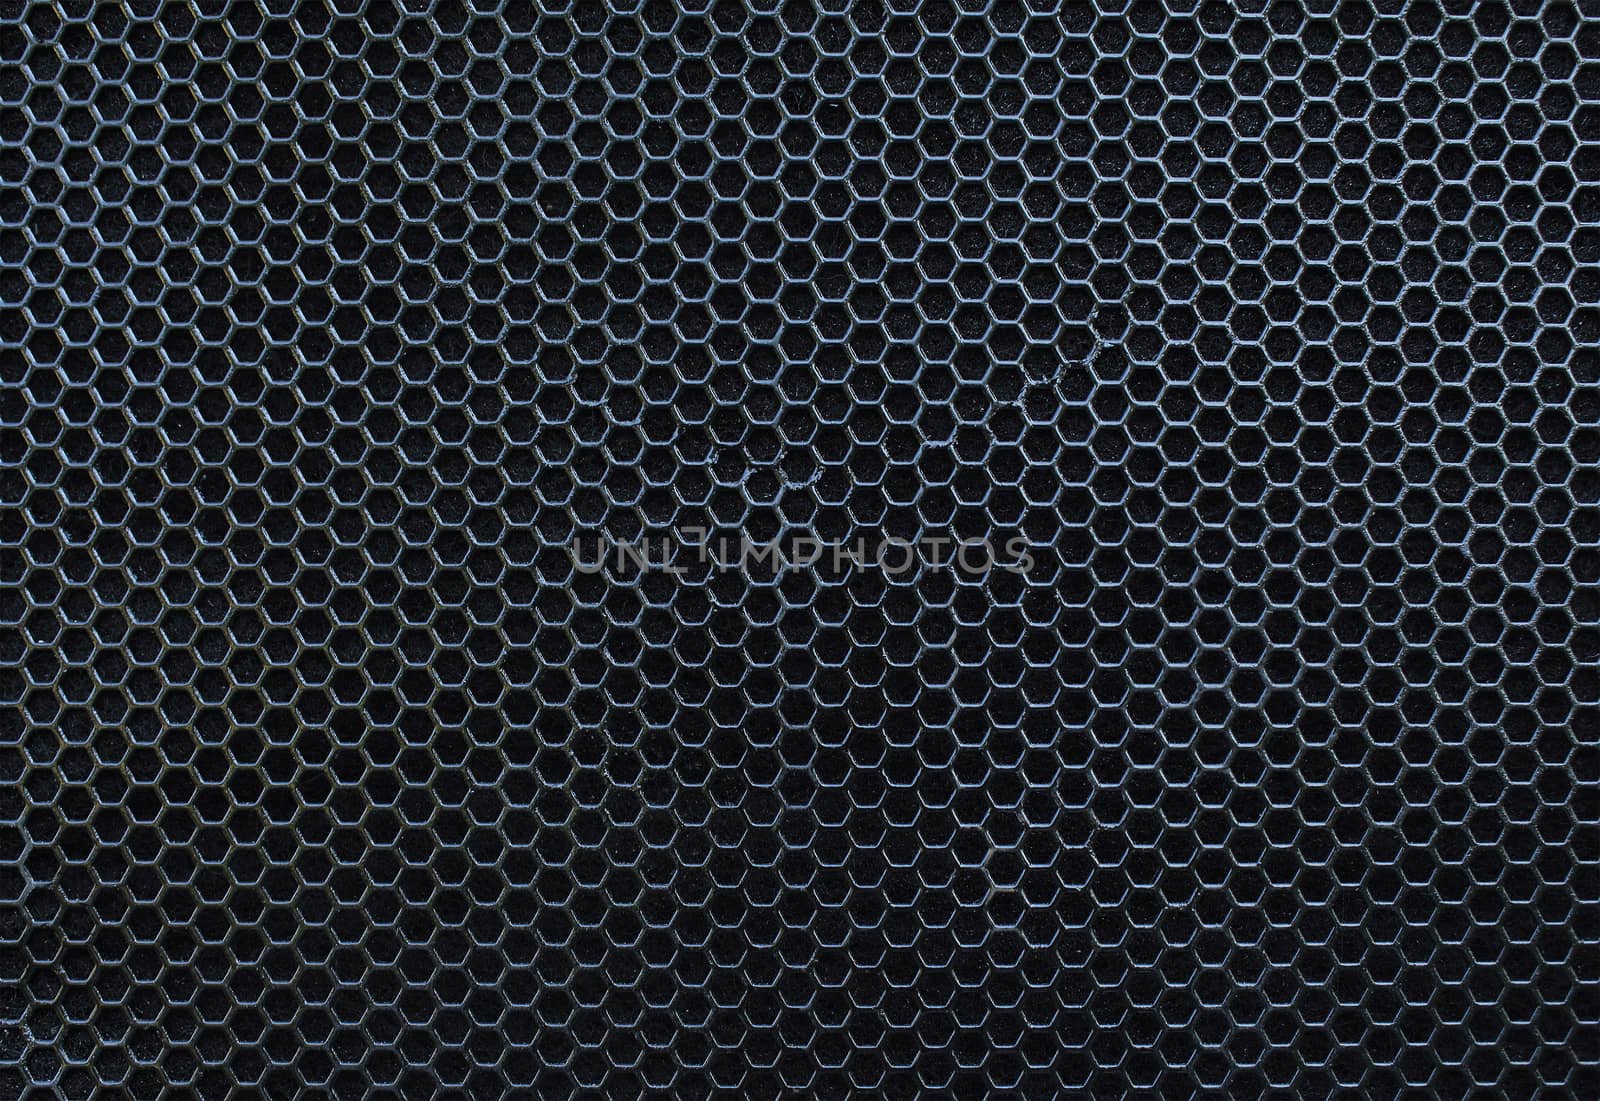 Speaker grille 